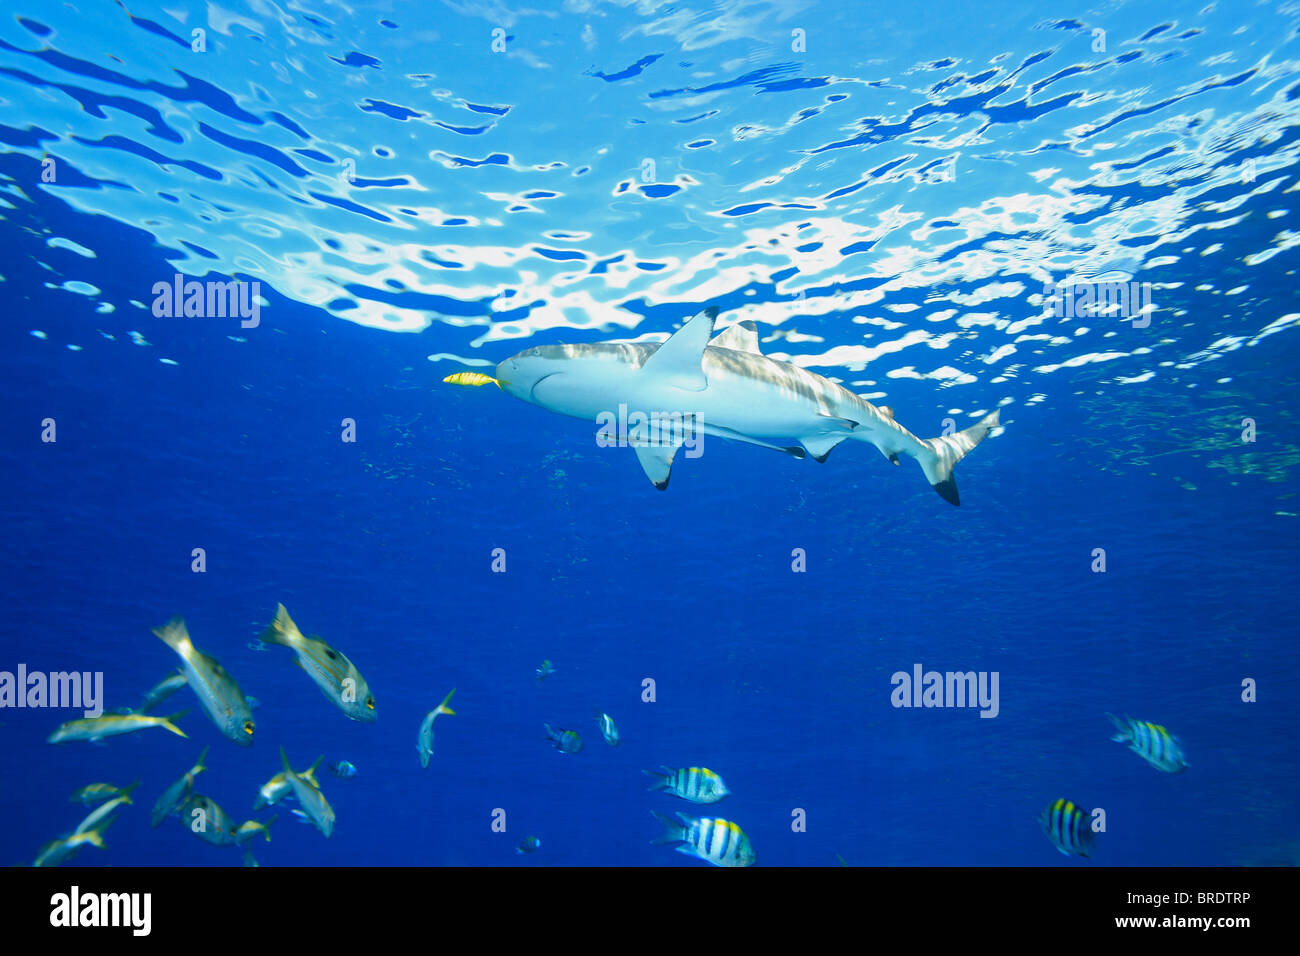 Un reef Blacktip Shark nuoto in acque poco profonde con un giallo pesce pilota e due esili suckerfish o remoras, sulla sua pancia. Foto Stock